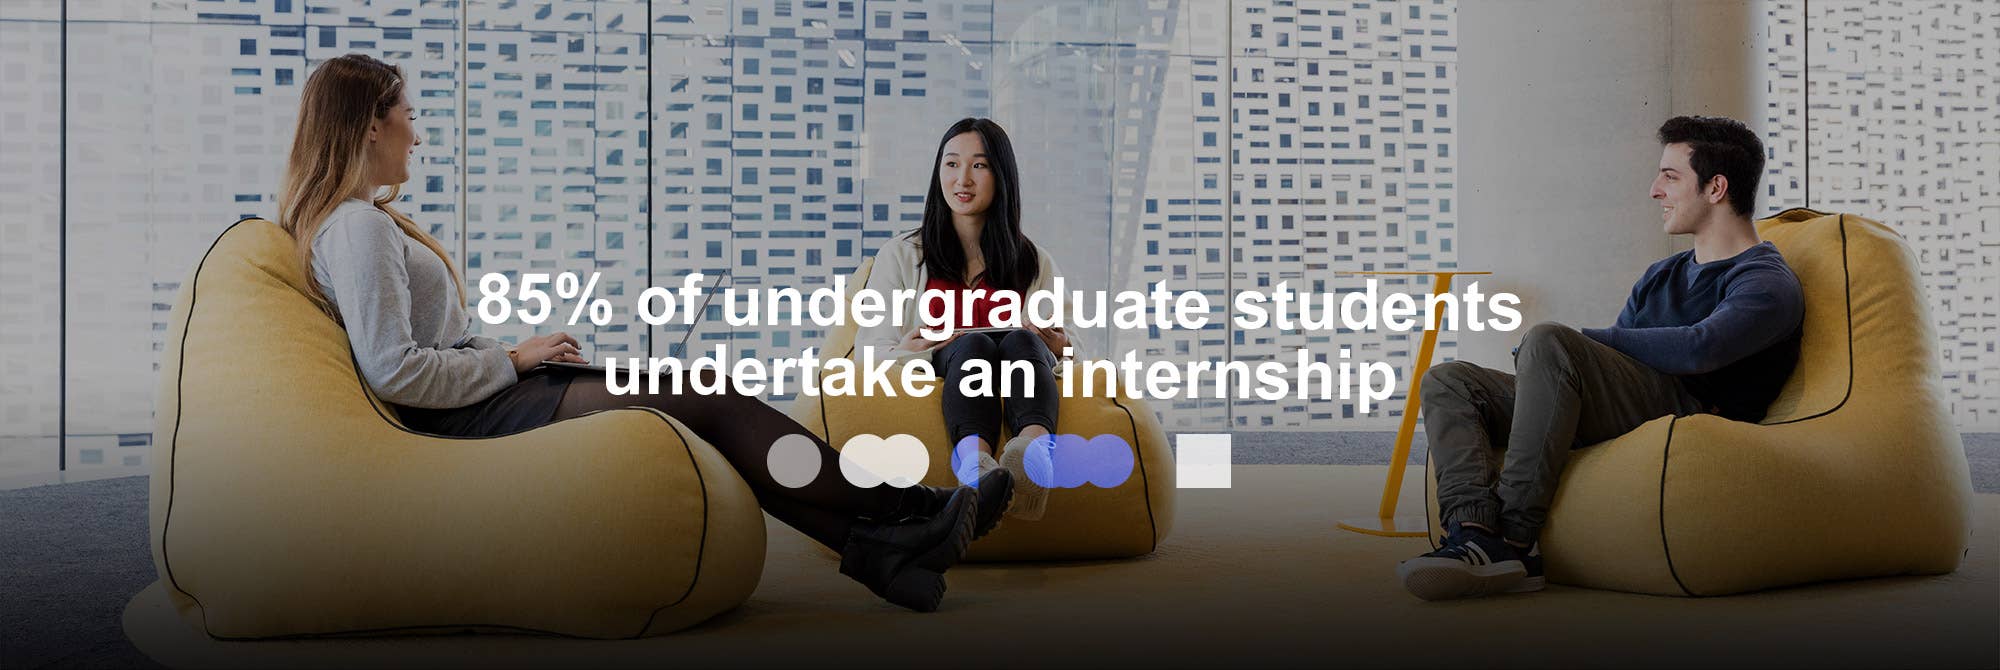 85% of undergraduate students undertake an internship